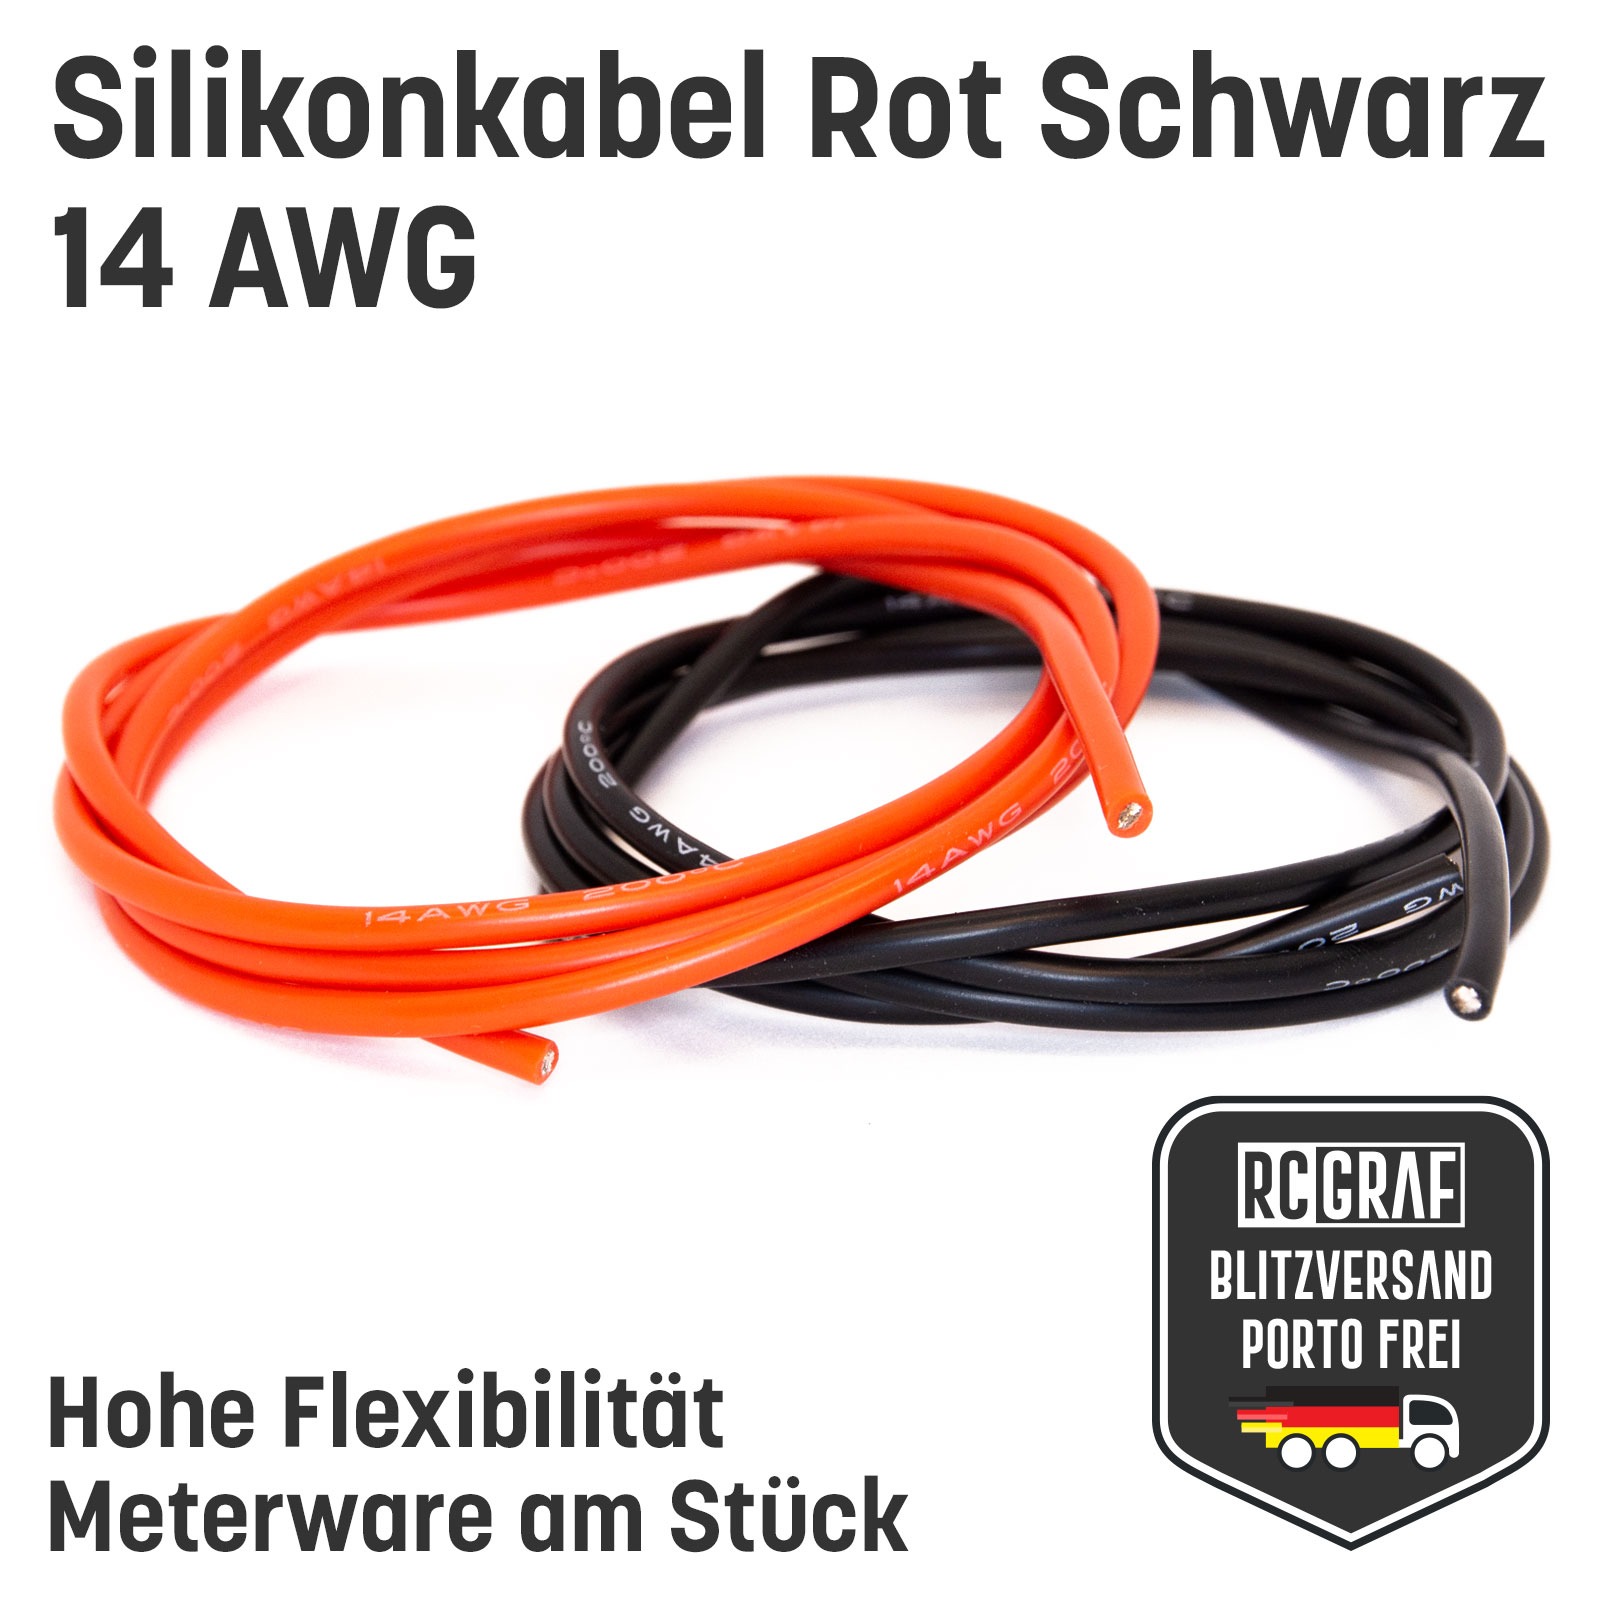 Silikonkabel 14 AWG hochflexibel Rot Schwarz Kupfer RC Kabel